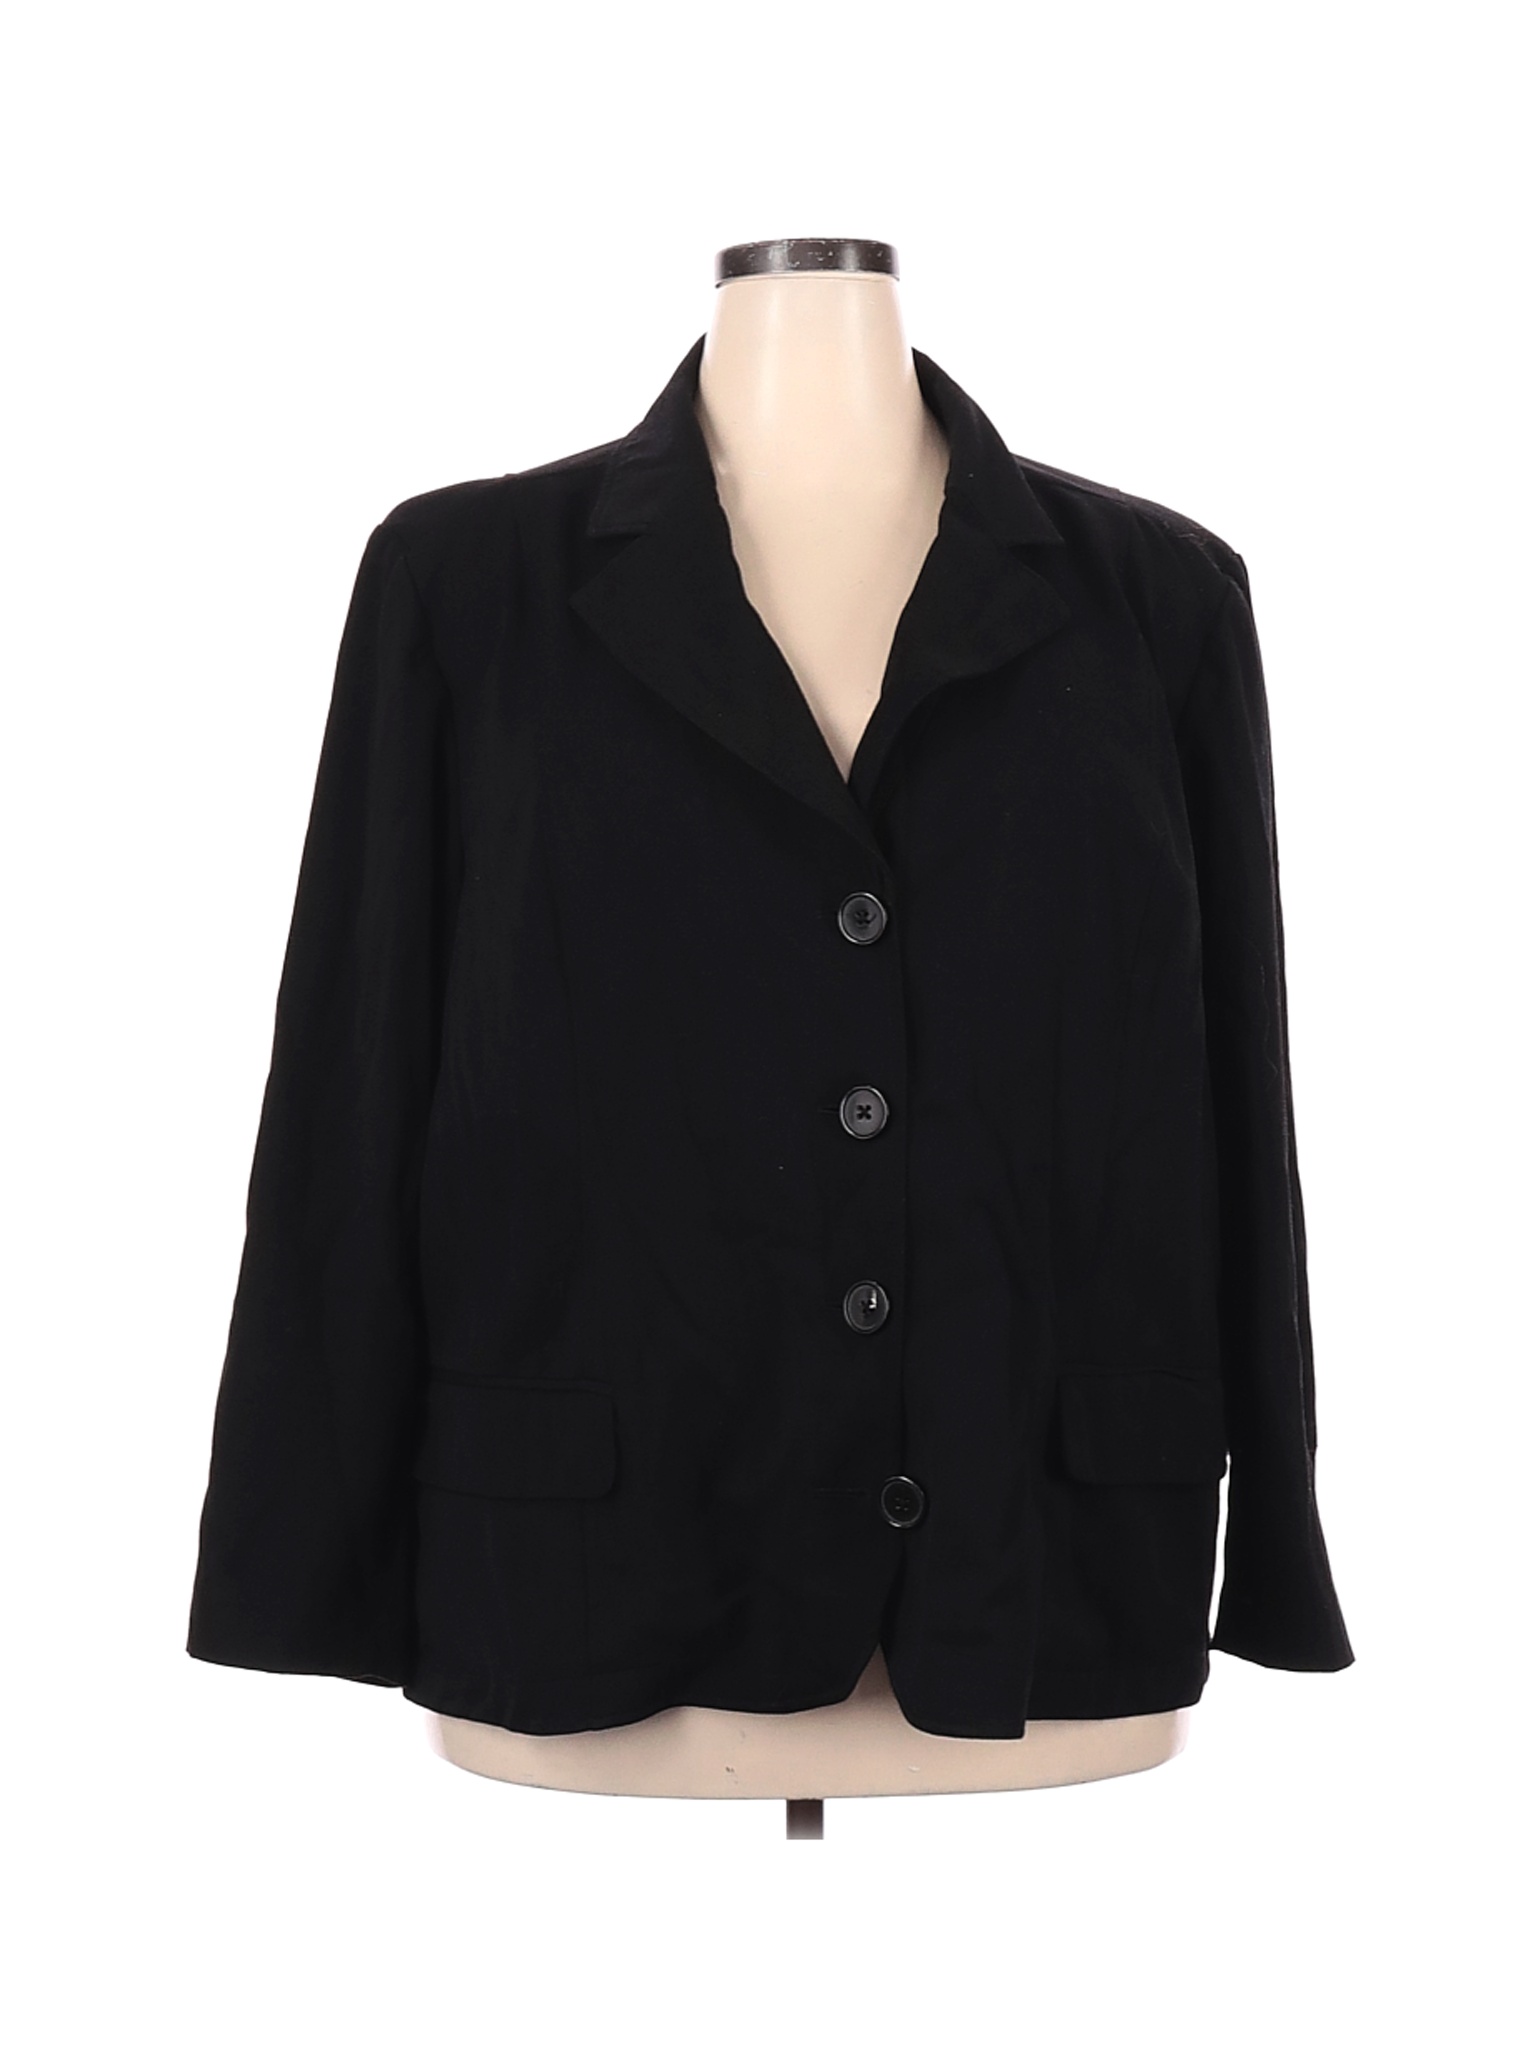 Lane Bryant Women Black Jacket 26 Plus | eBay